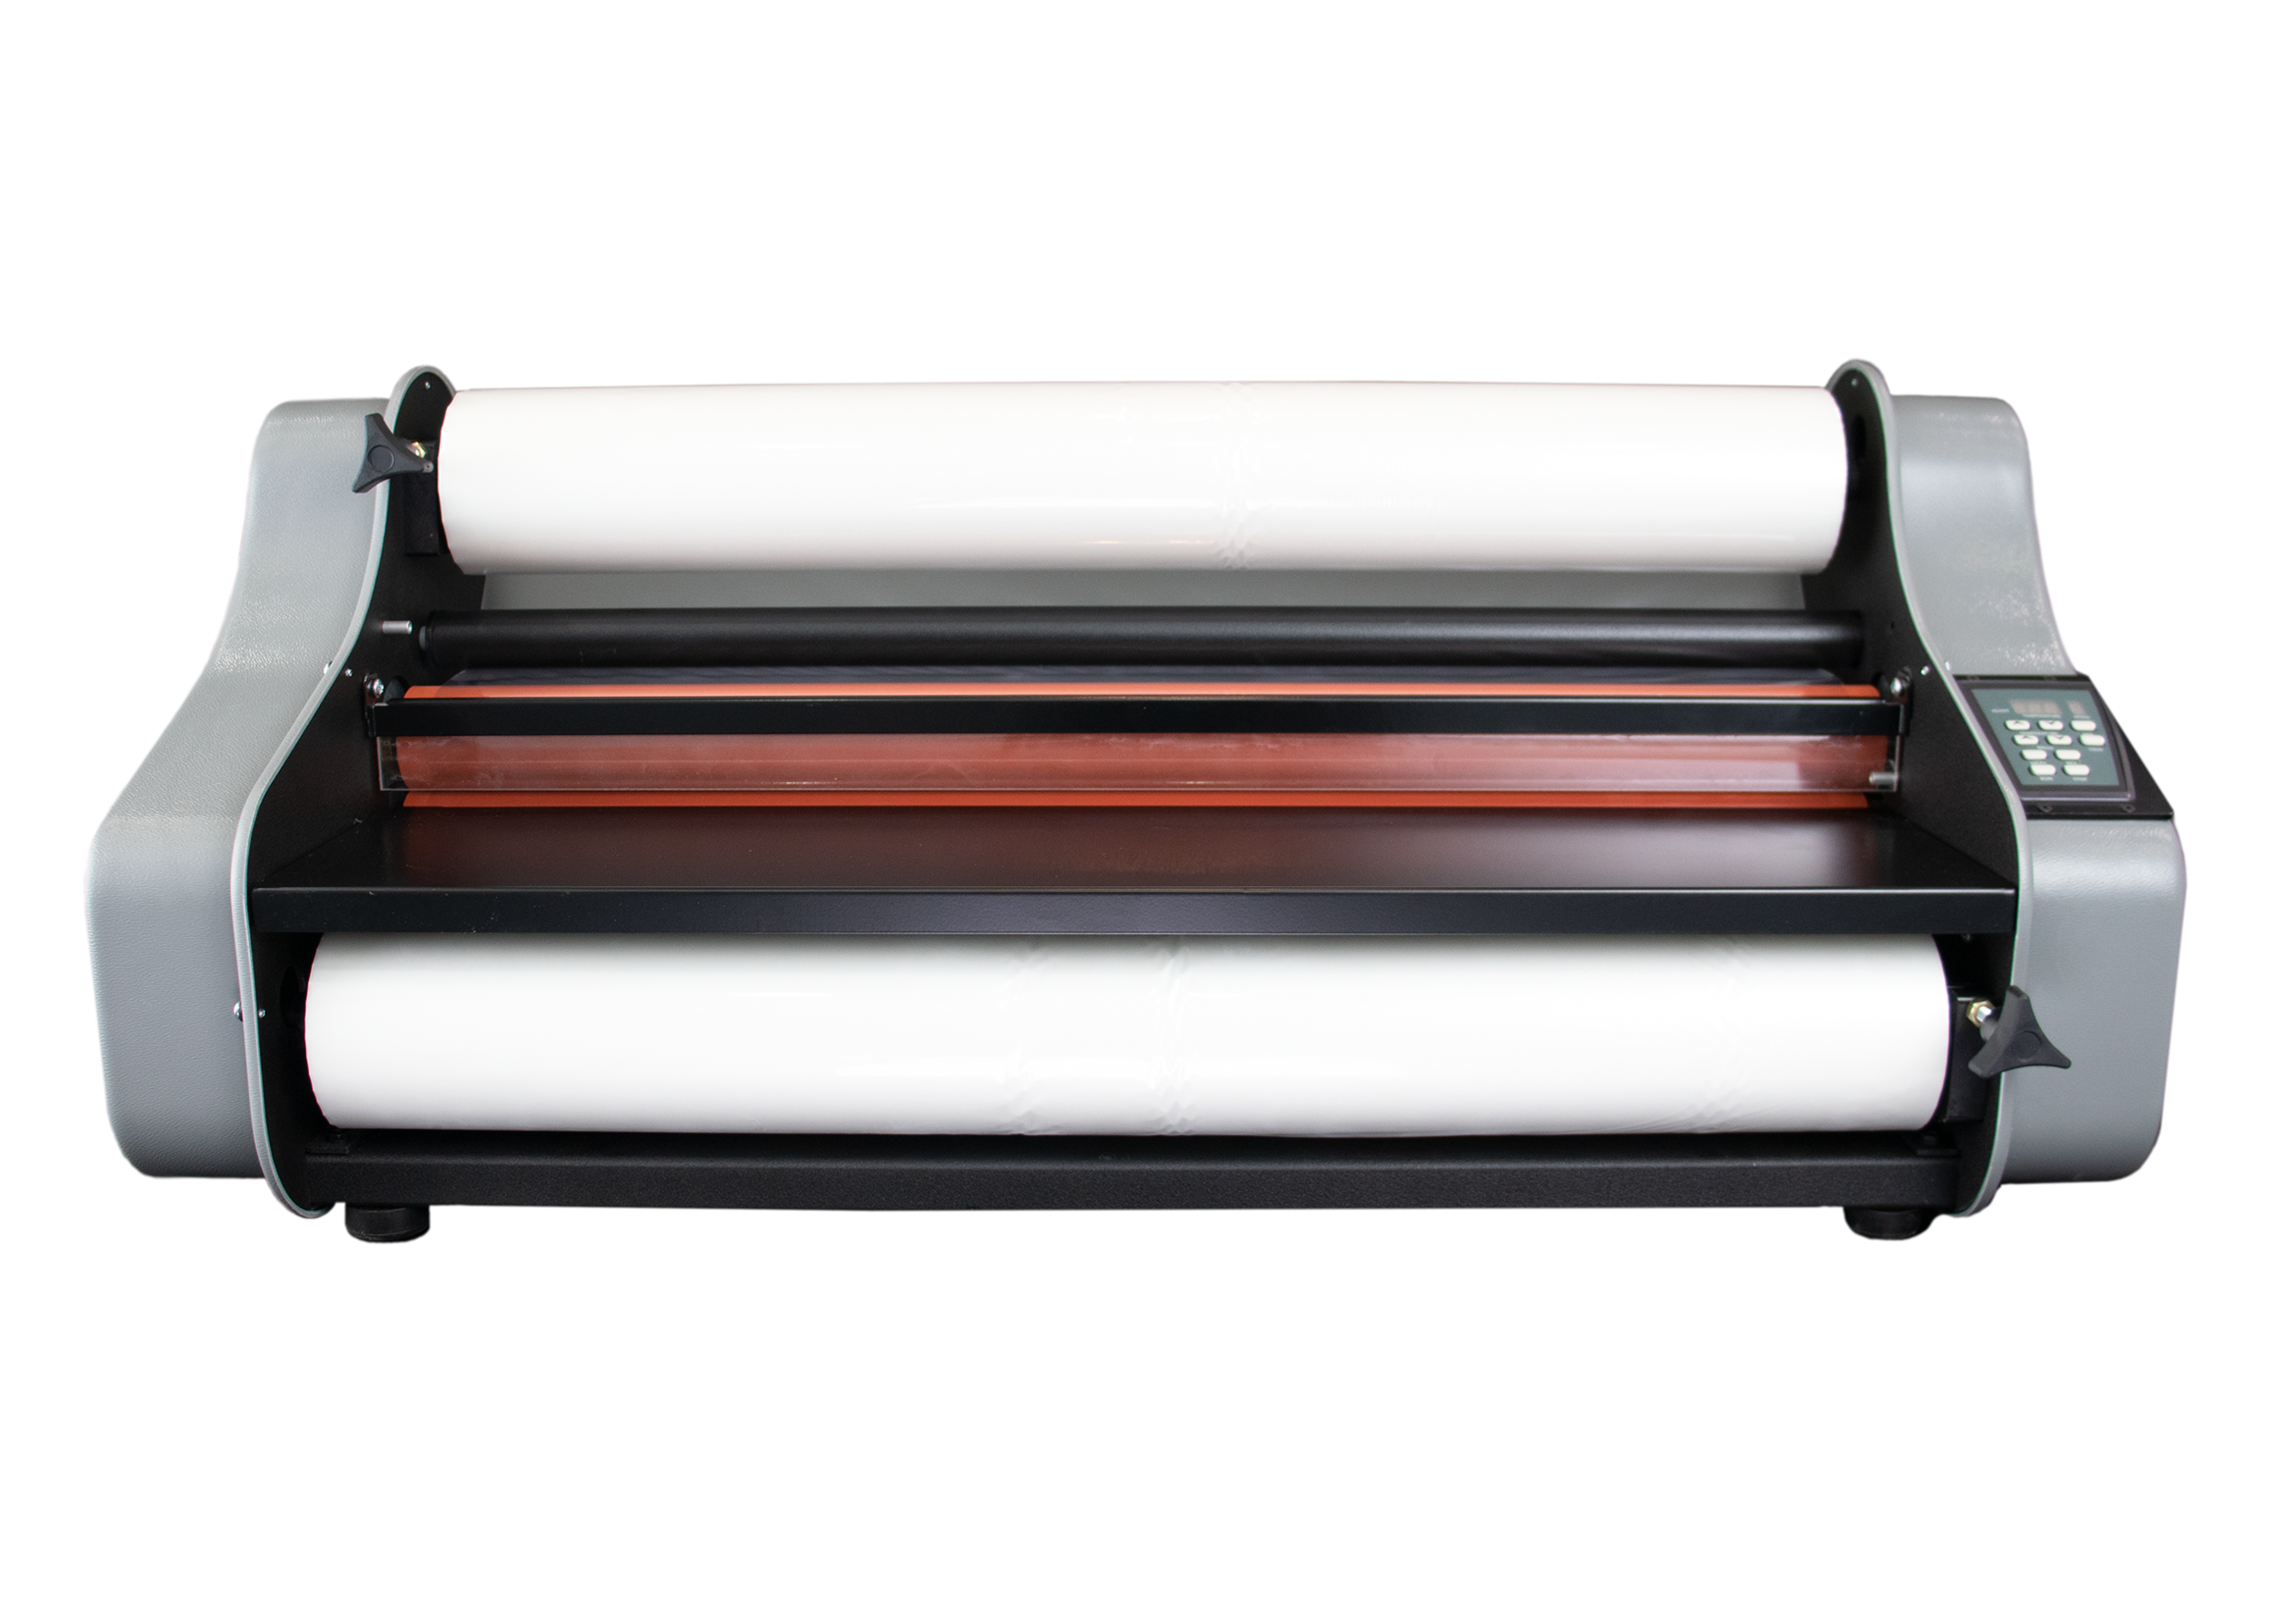 DryLam 27 Professional Series Roll Laminator